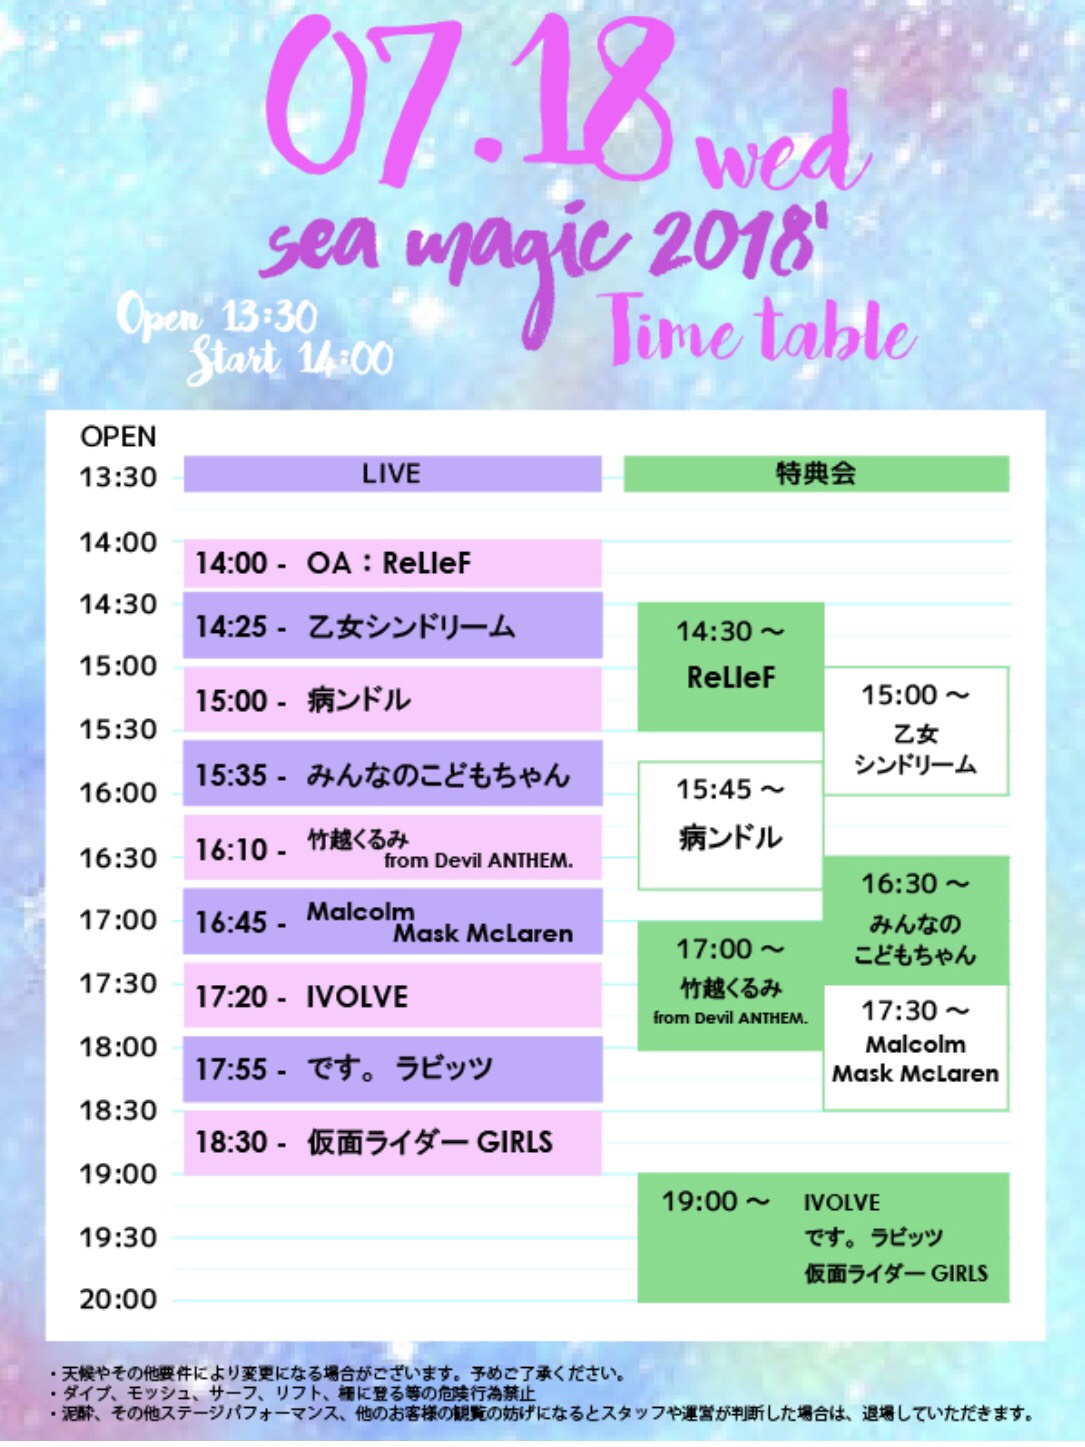 OTODAMA SEA STUDIO 2018 supported by POCARI SWEAT 「SEA MAGIC 2018'」   タイムテーブル